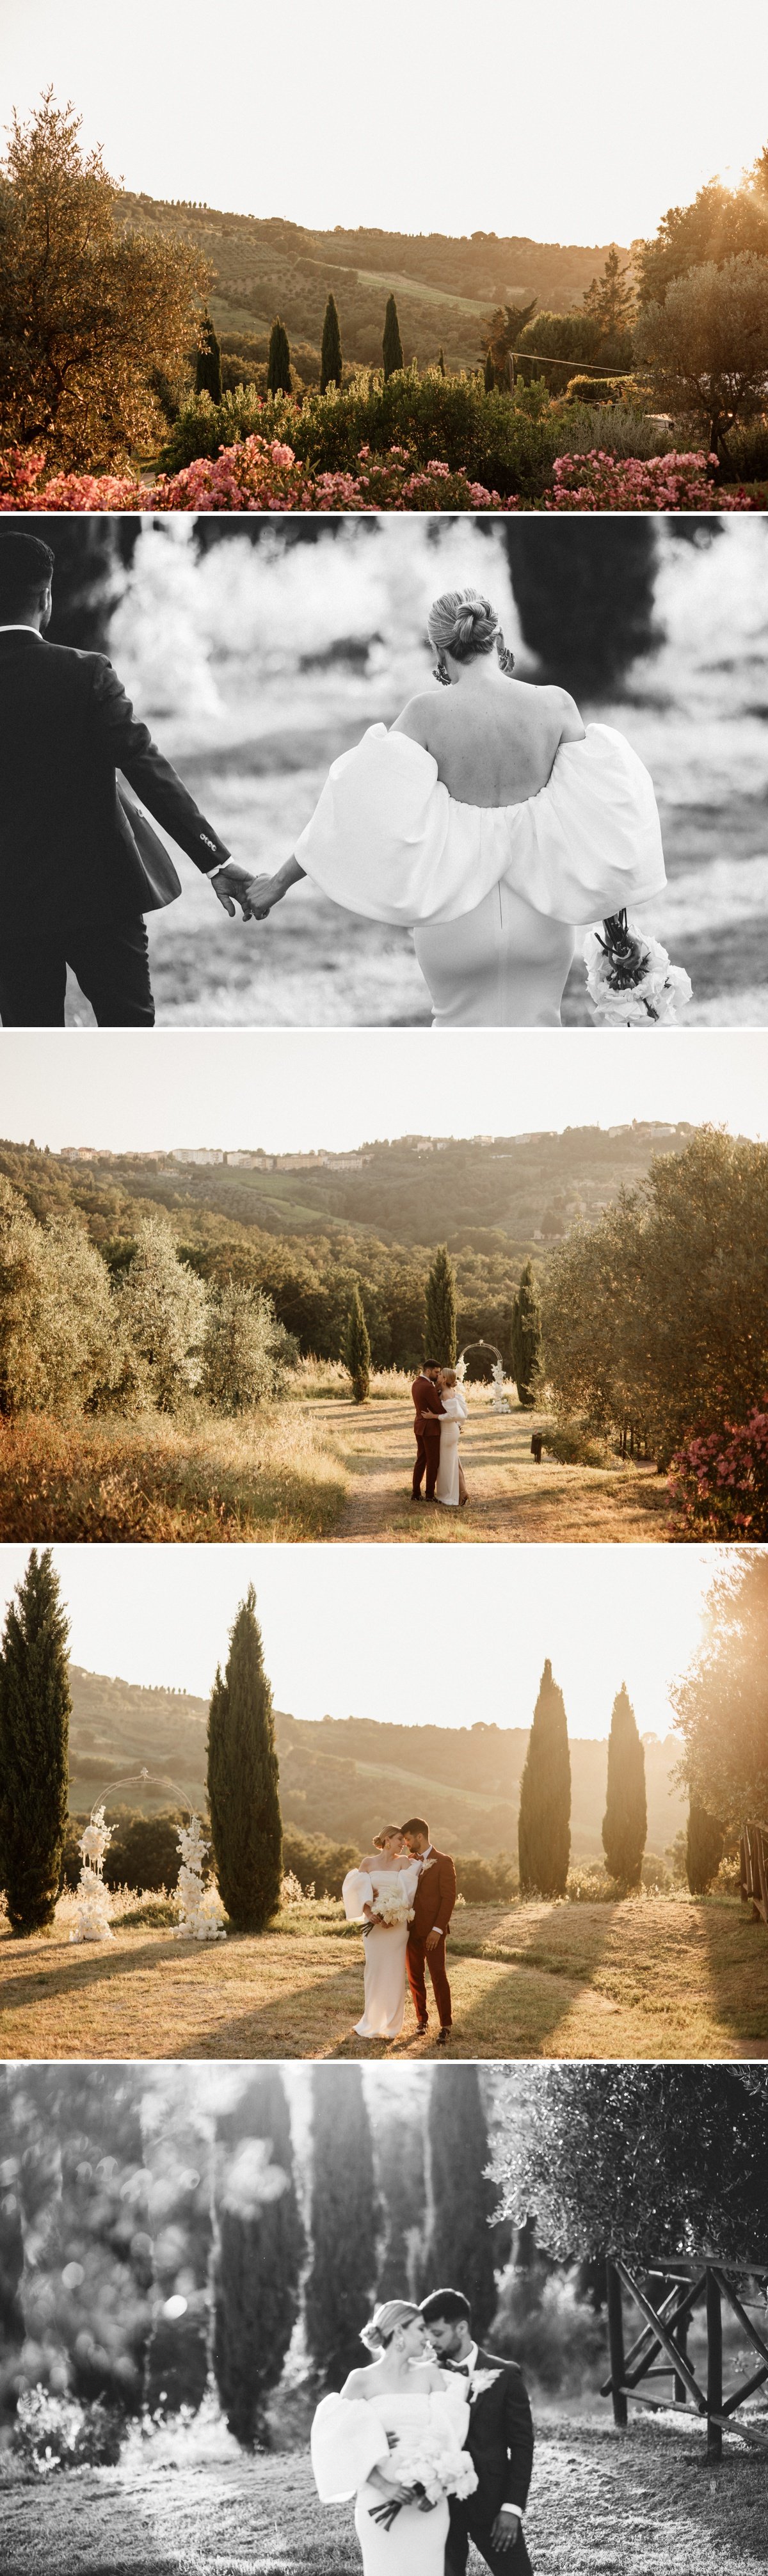 tuscany-wedding-dallk-21.jpg